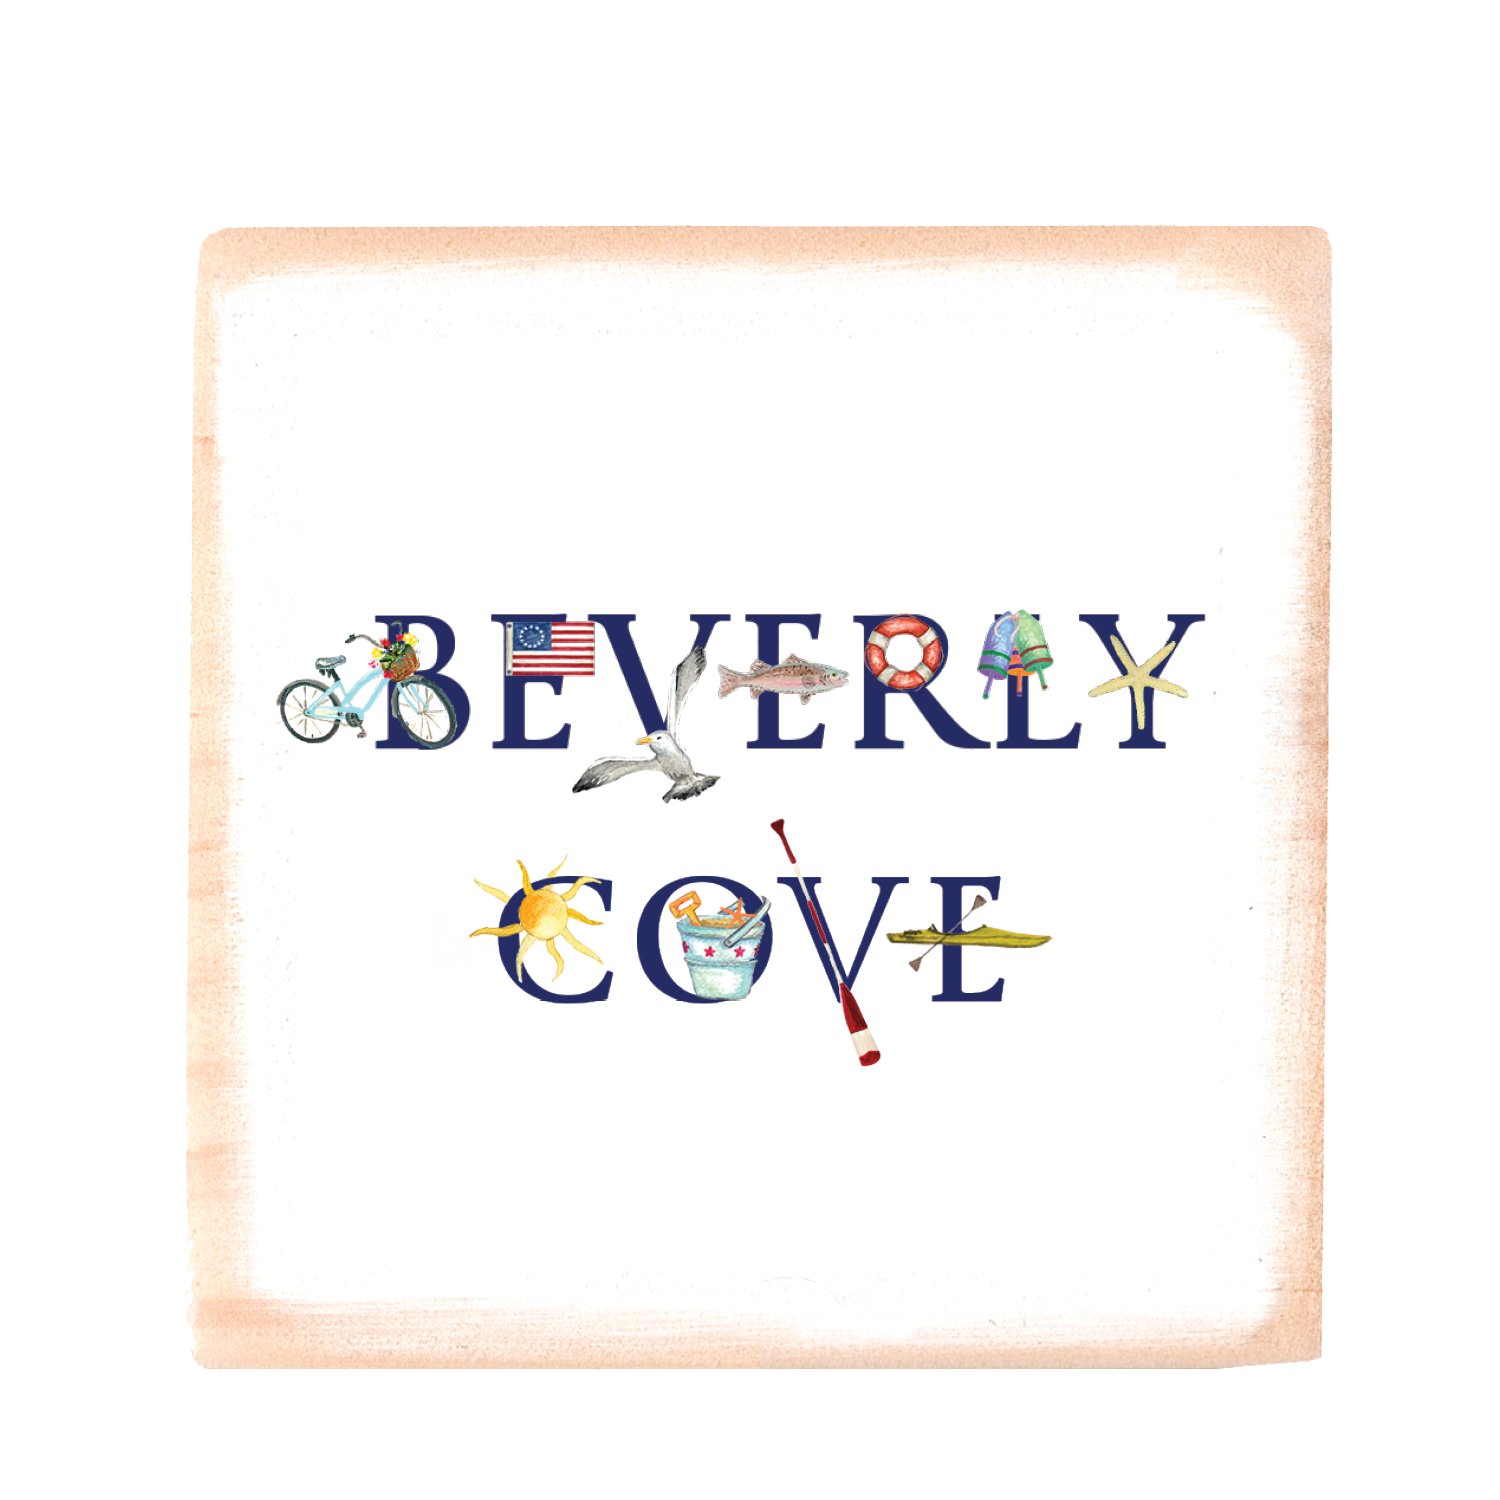 beverly cove square block